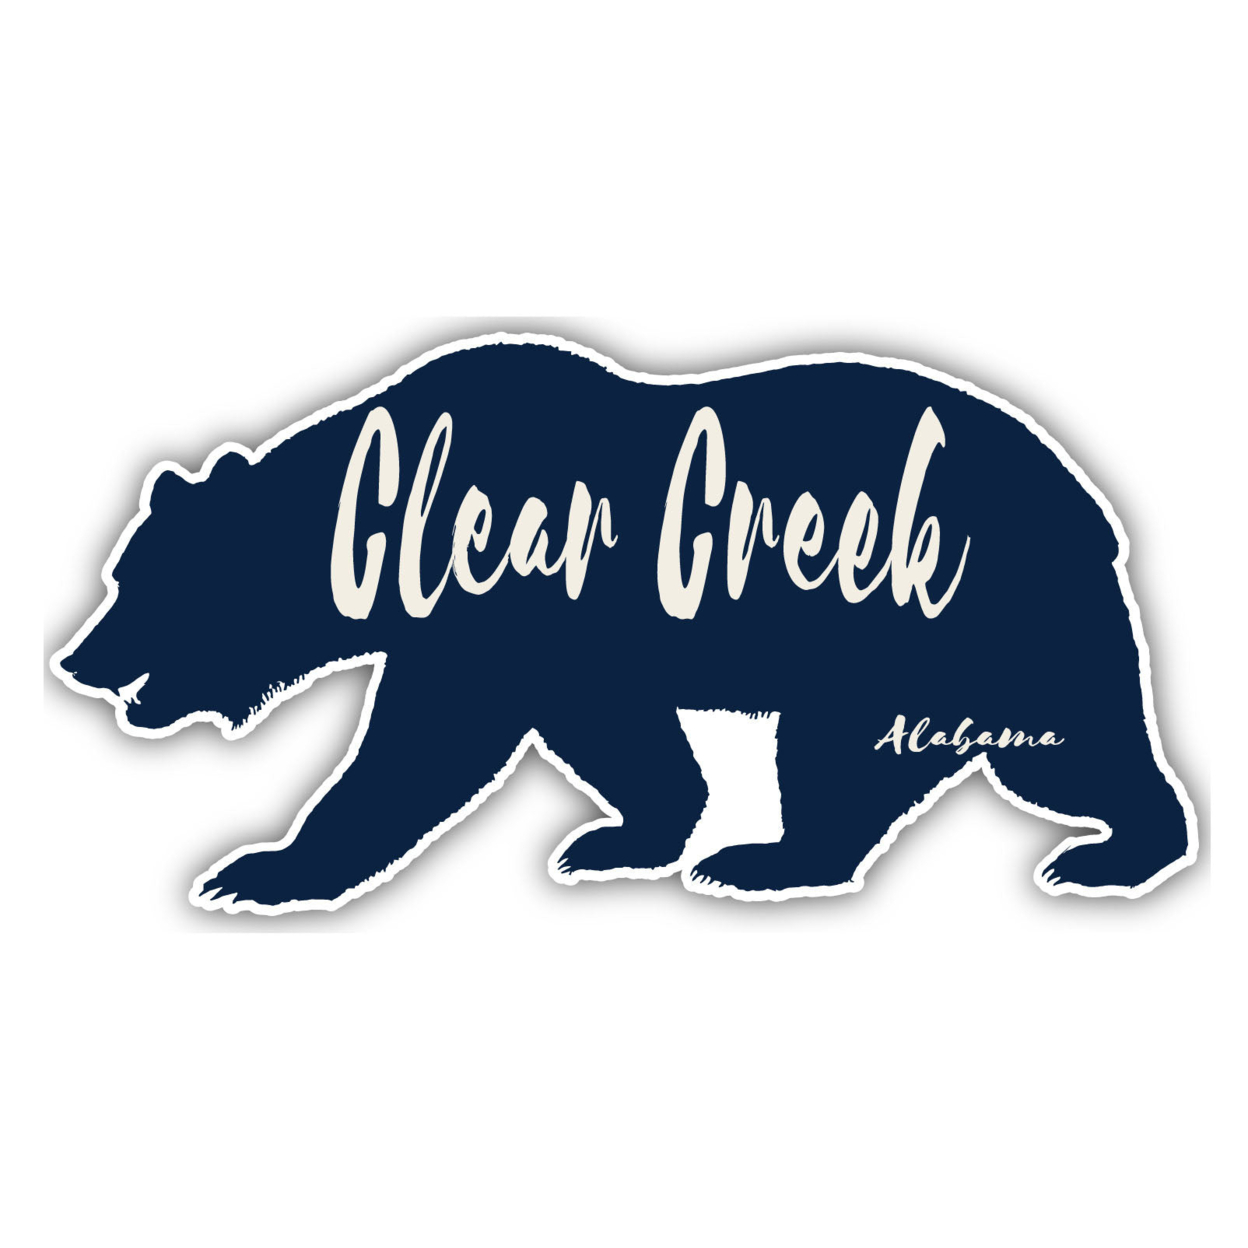 Clear Creek Alabama Souvenir Decorative Stickers (Choose Theme And Size) - Single Unit, 2-Inch, Tent